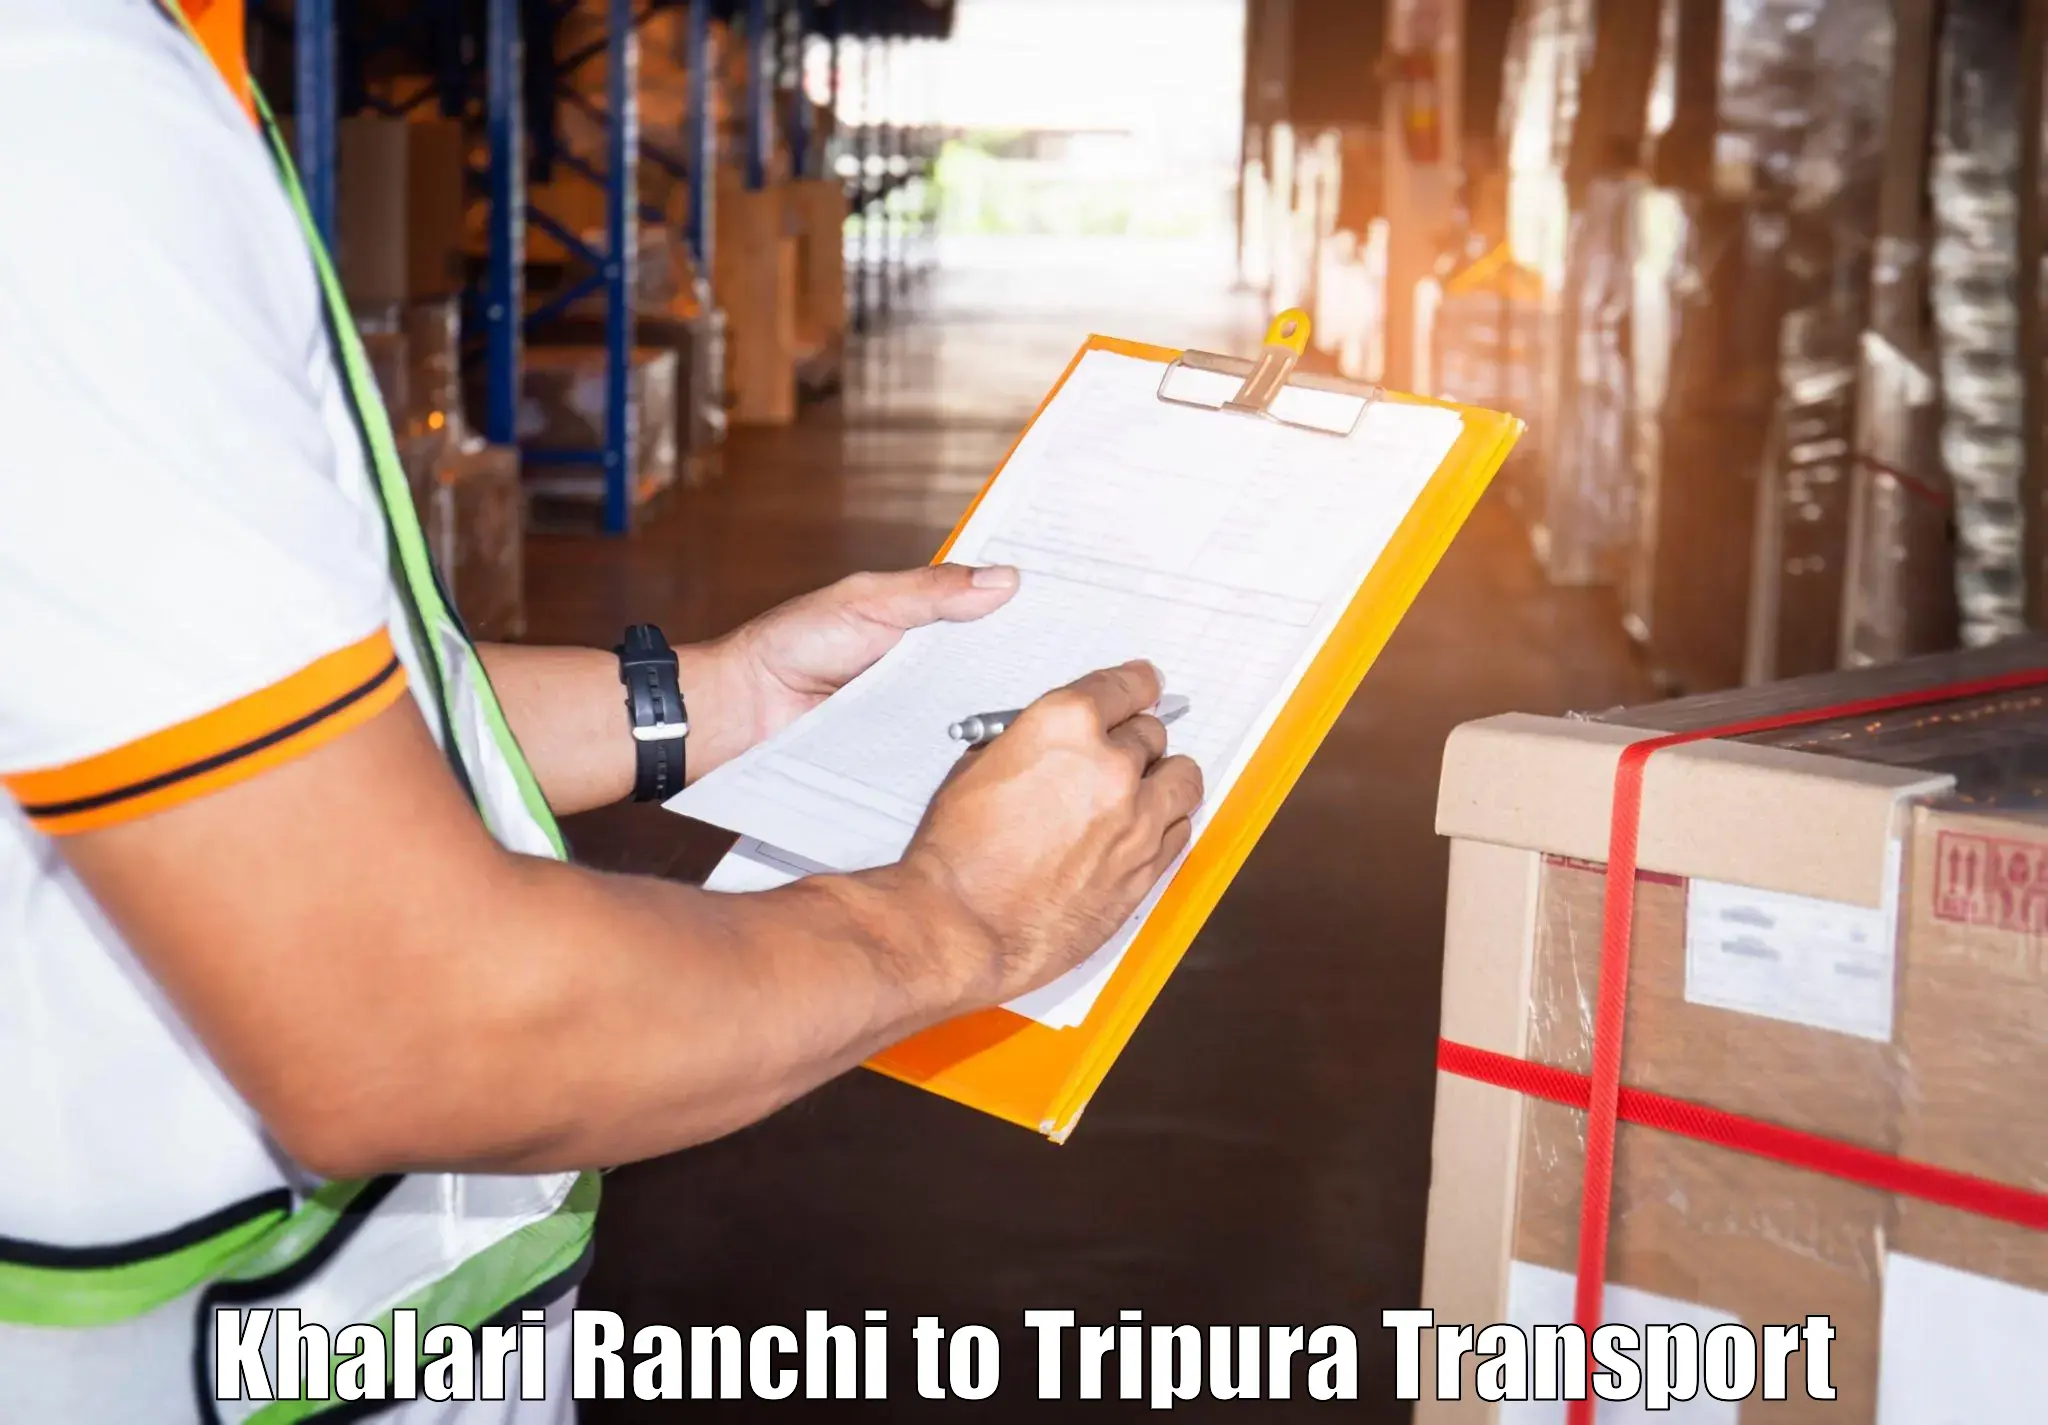 Logistics transportation services in Khalari Ranchi to Agartala